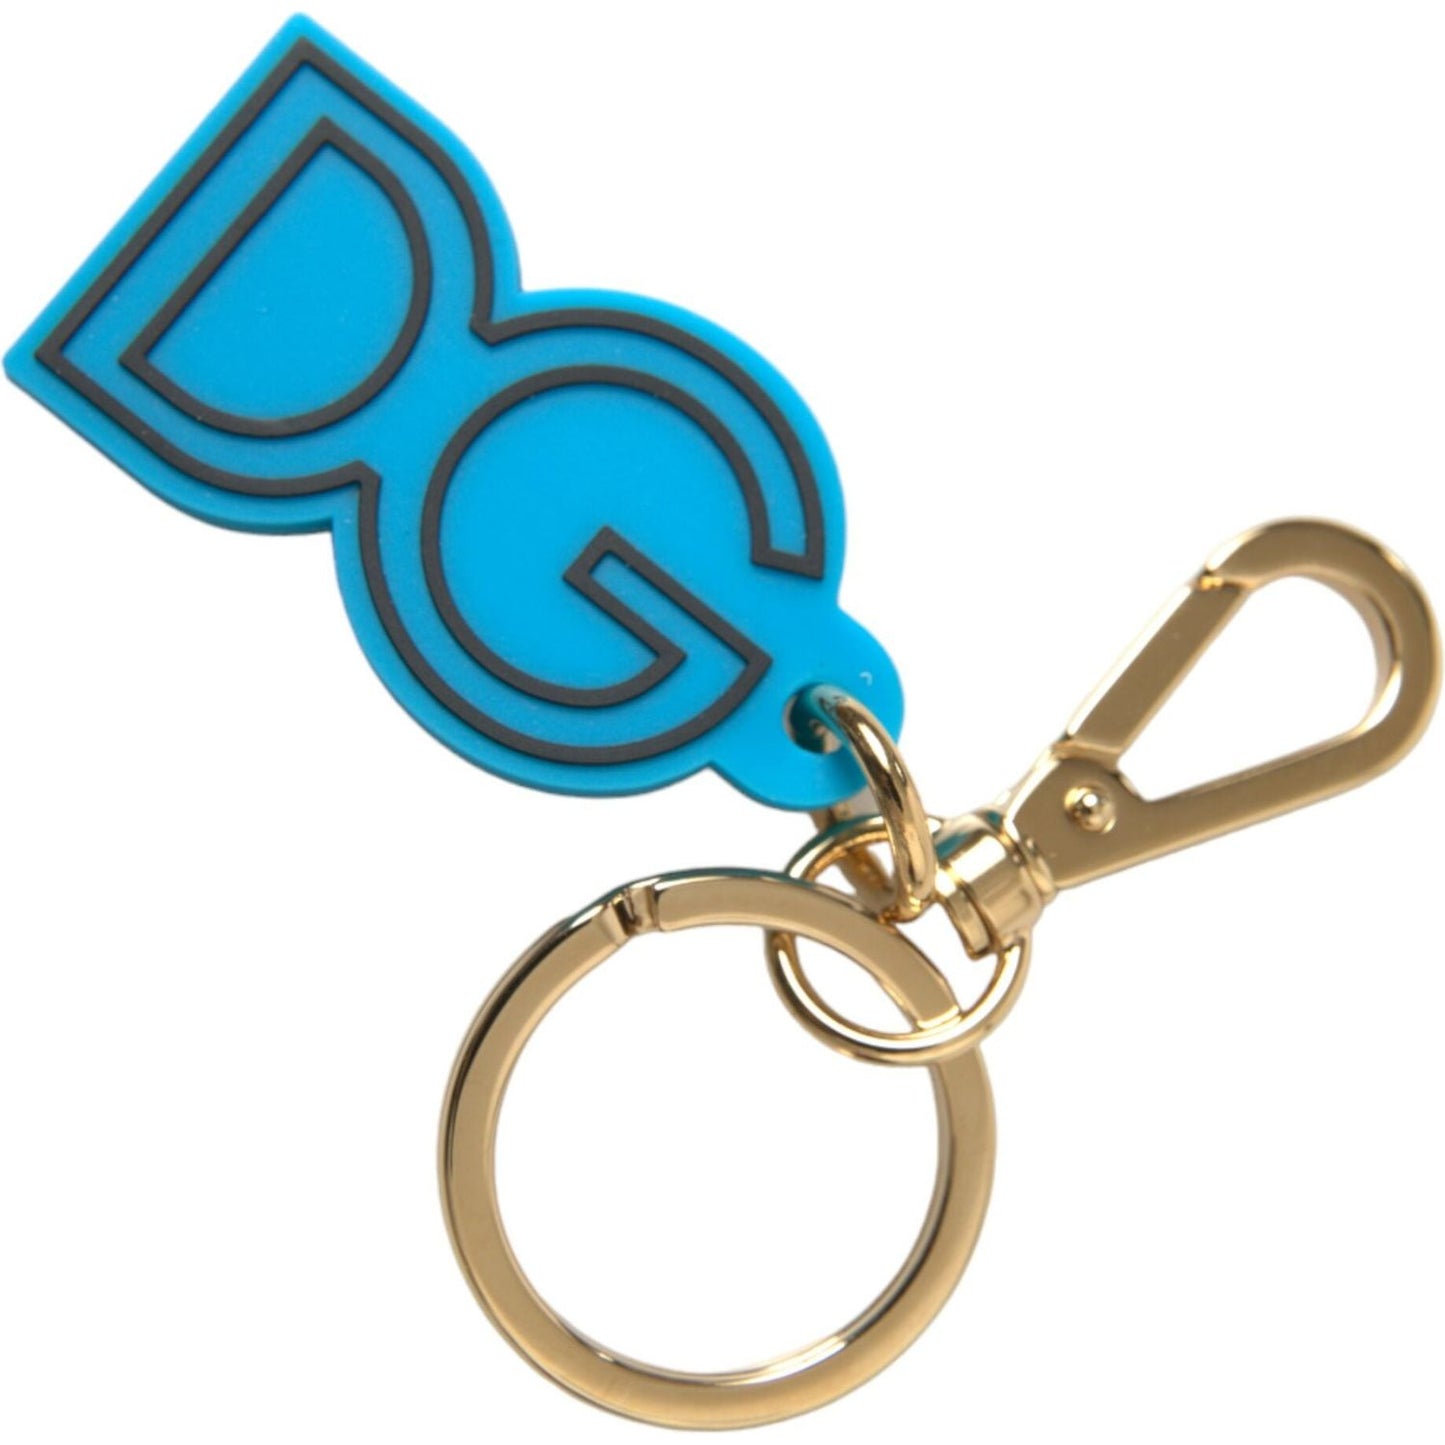 Dolce & Gabbana Elegant Blue & Gold Keychain Accessory elegant-blue-gold-keychain-accessory-1